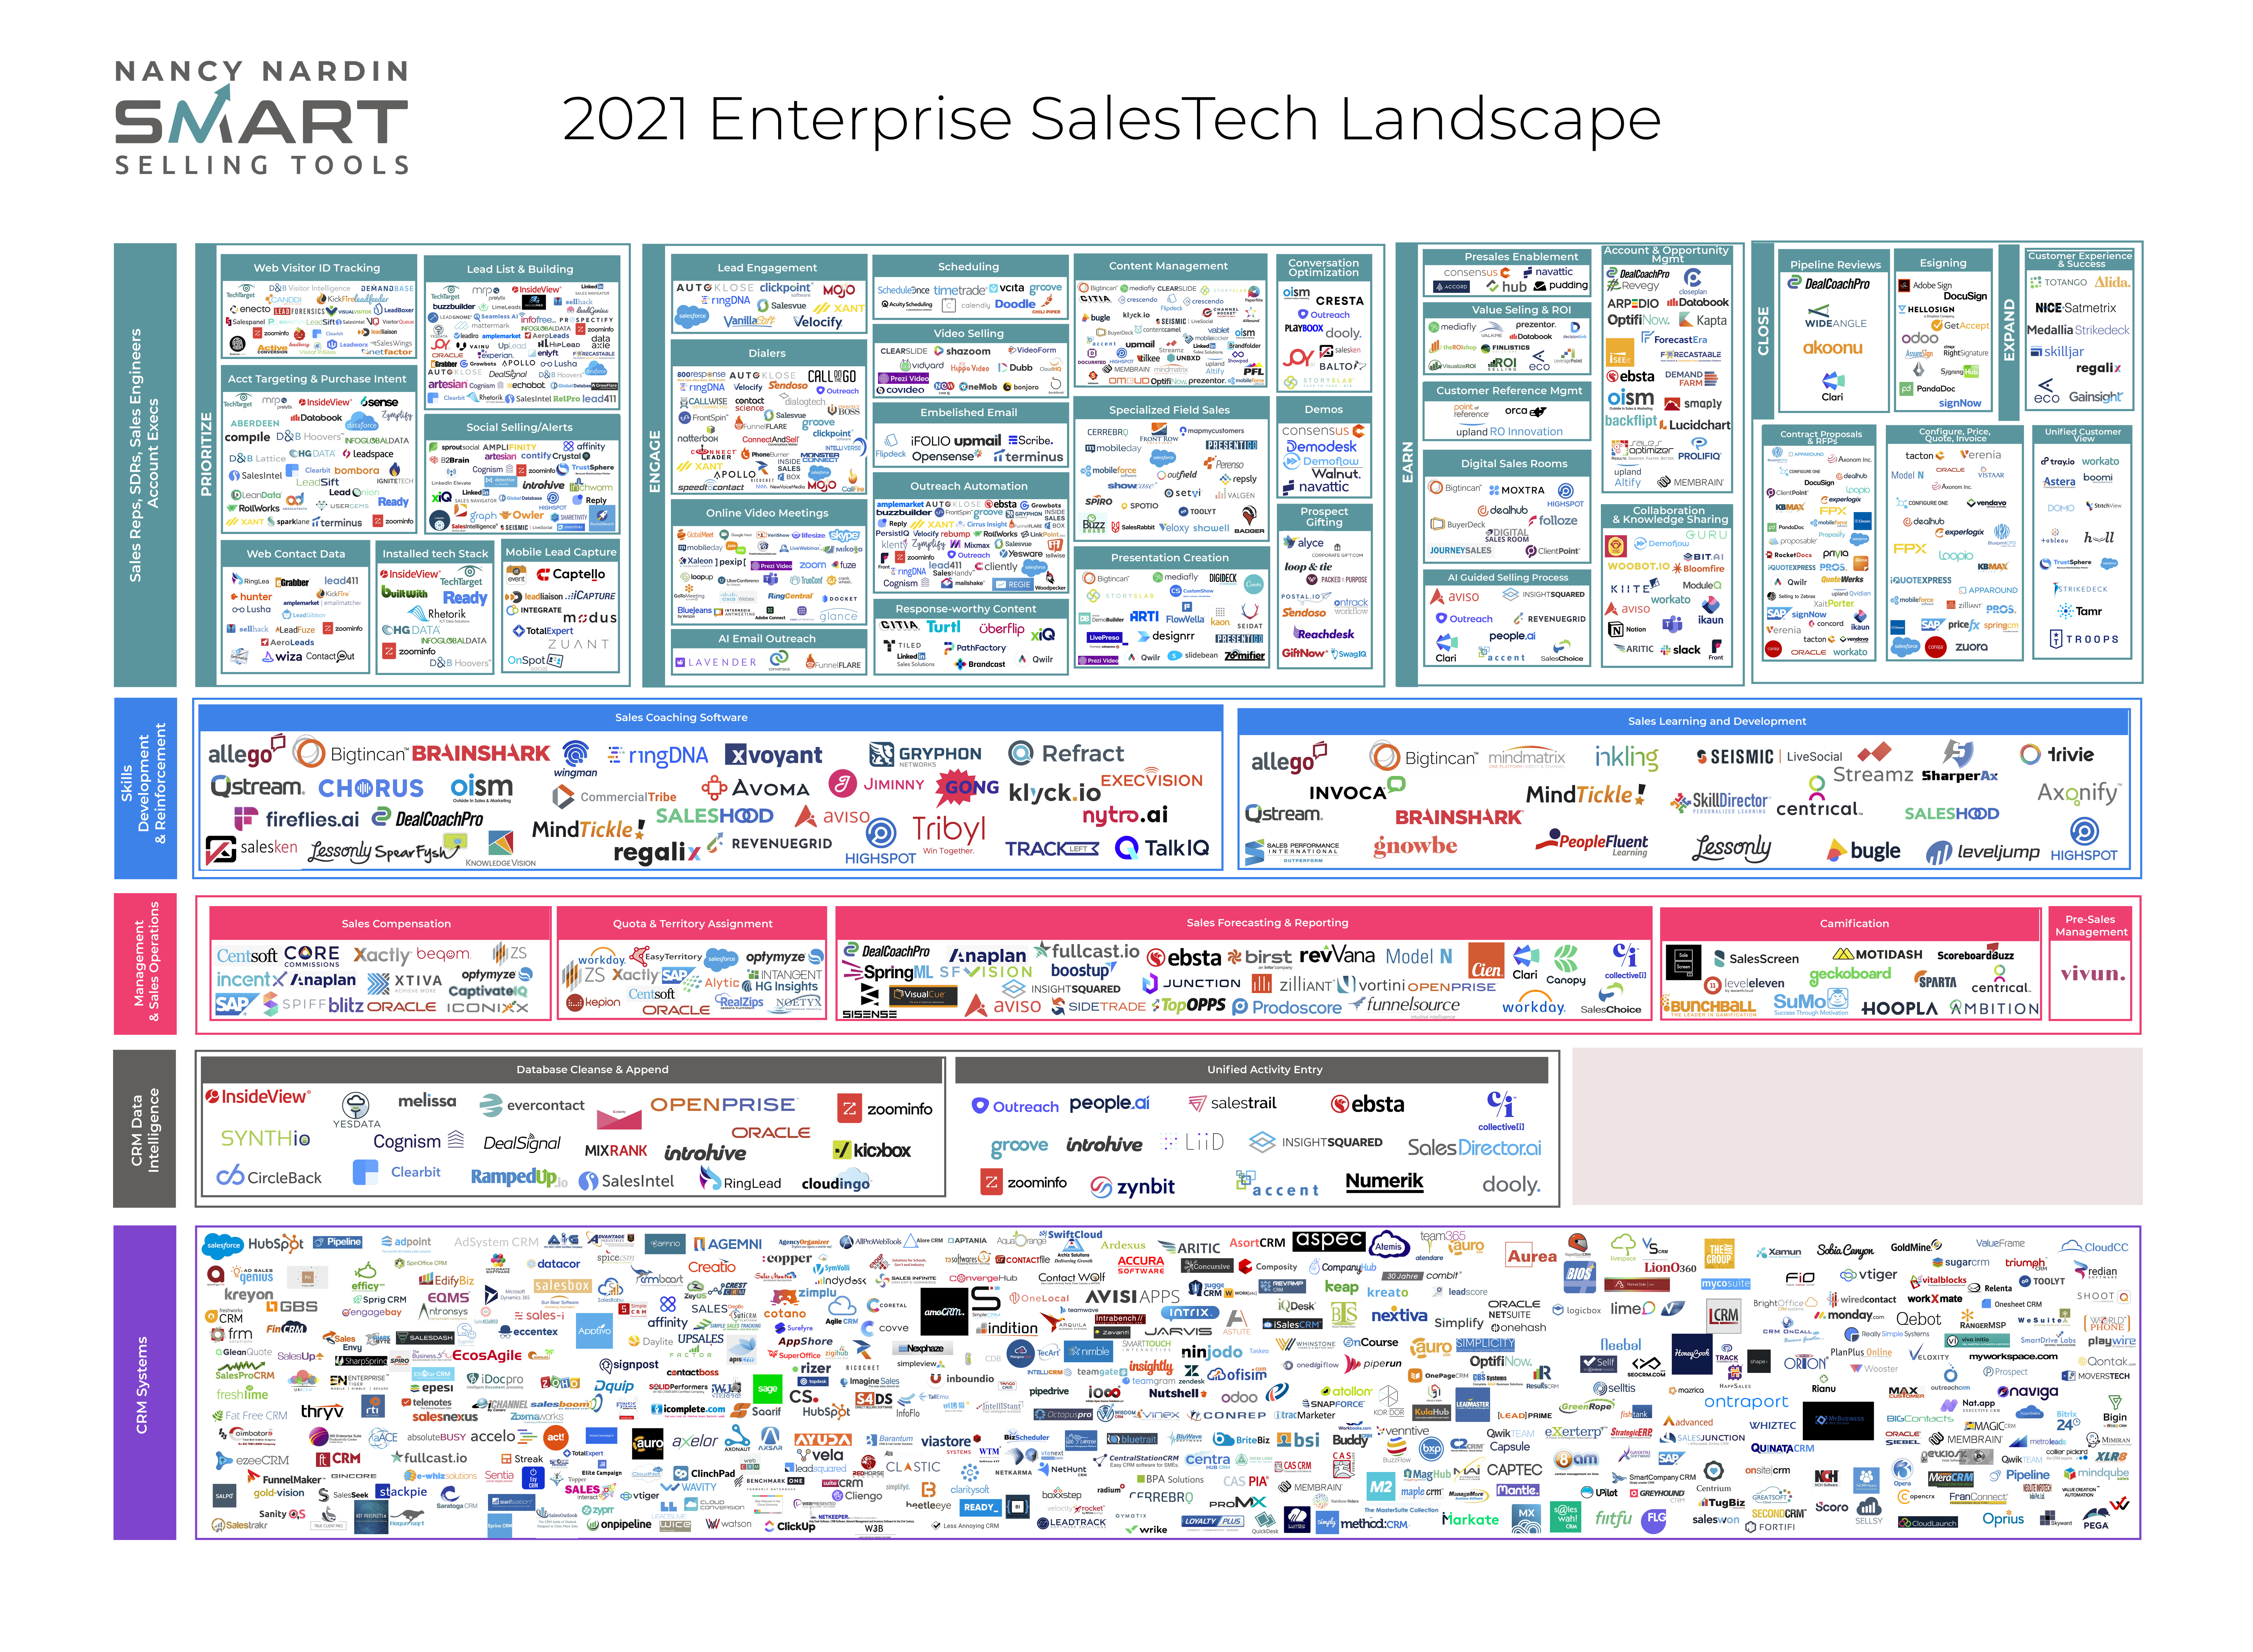 2021-Enterprise-SalesTech-Landscape-Full-Image